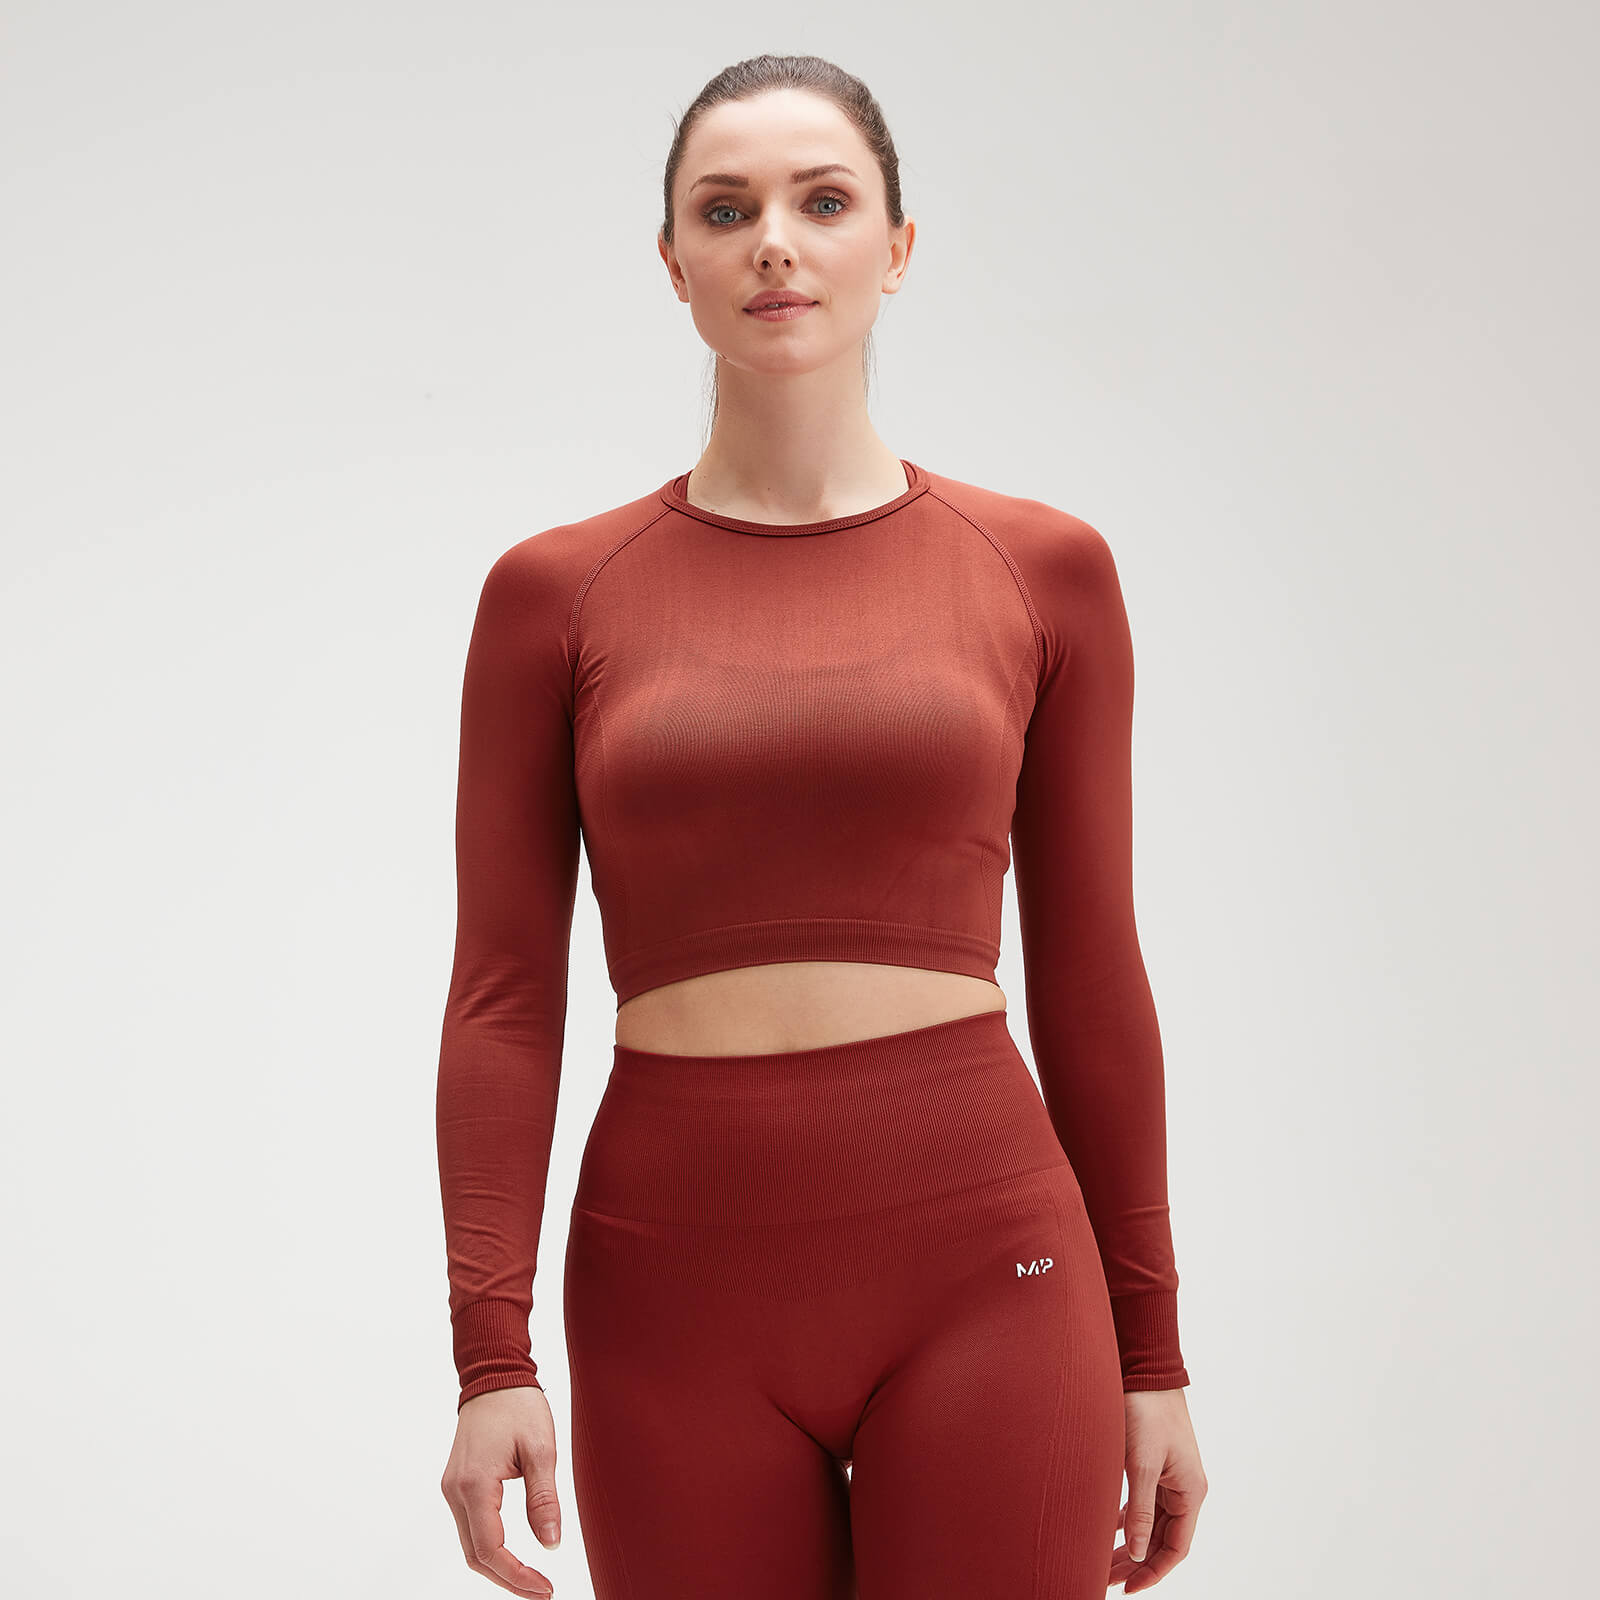 MP Shape Seamless Ultra Long Sleeve Crop Top för kvinnor – Röd - XL